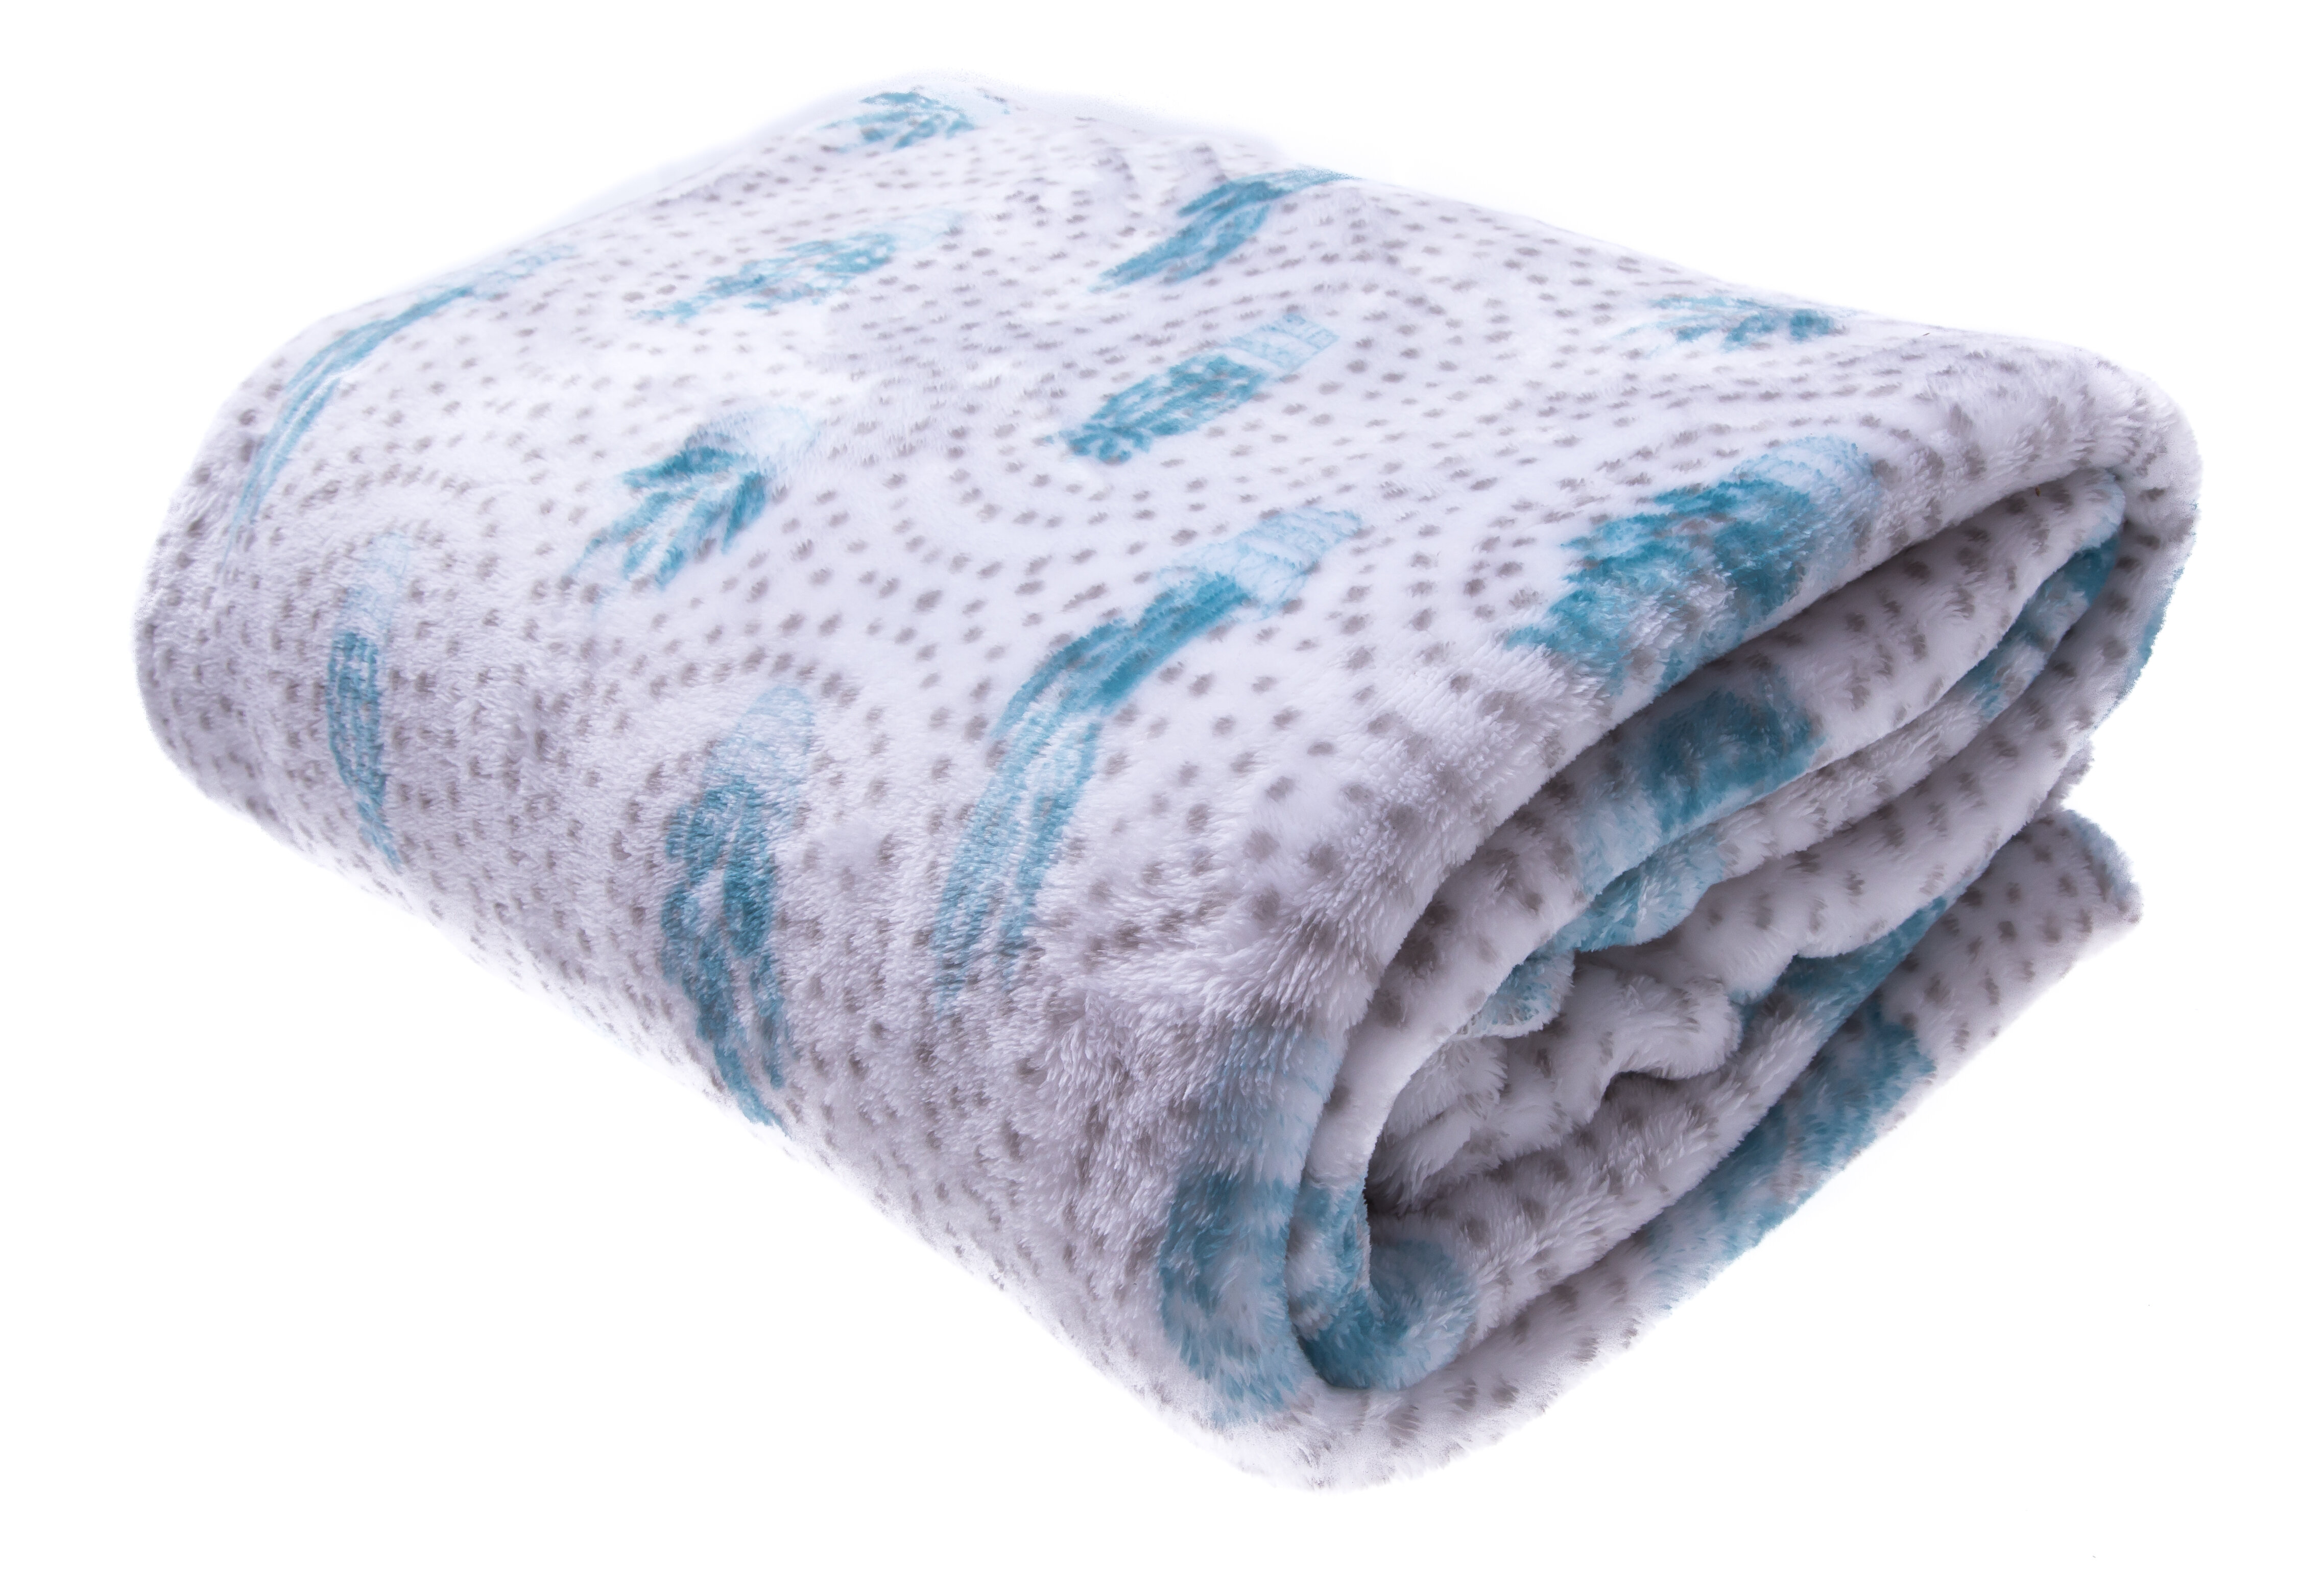 Elle Decor Blankets Throws You Ll Love In 2021 Wayfair Home » diy + handmade » no sew flannel throw blanket. elle decor blankets throws you ll